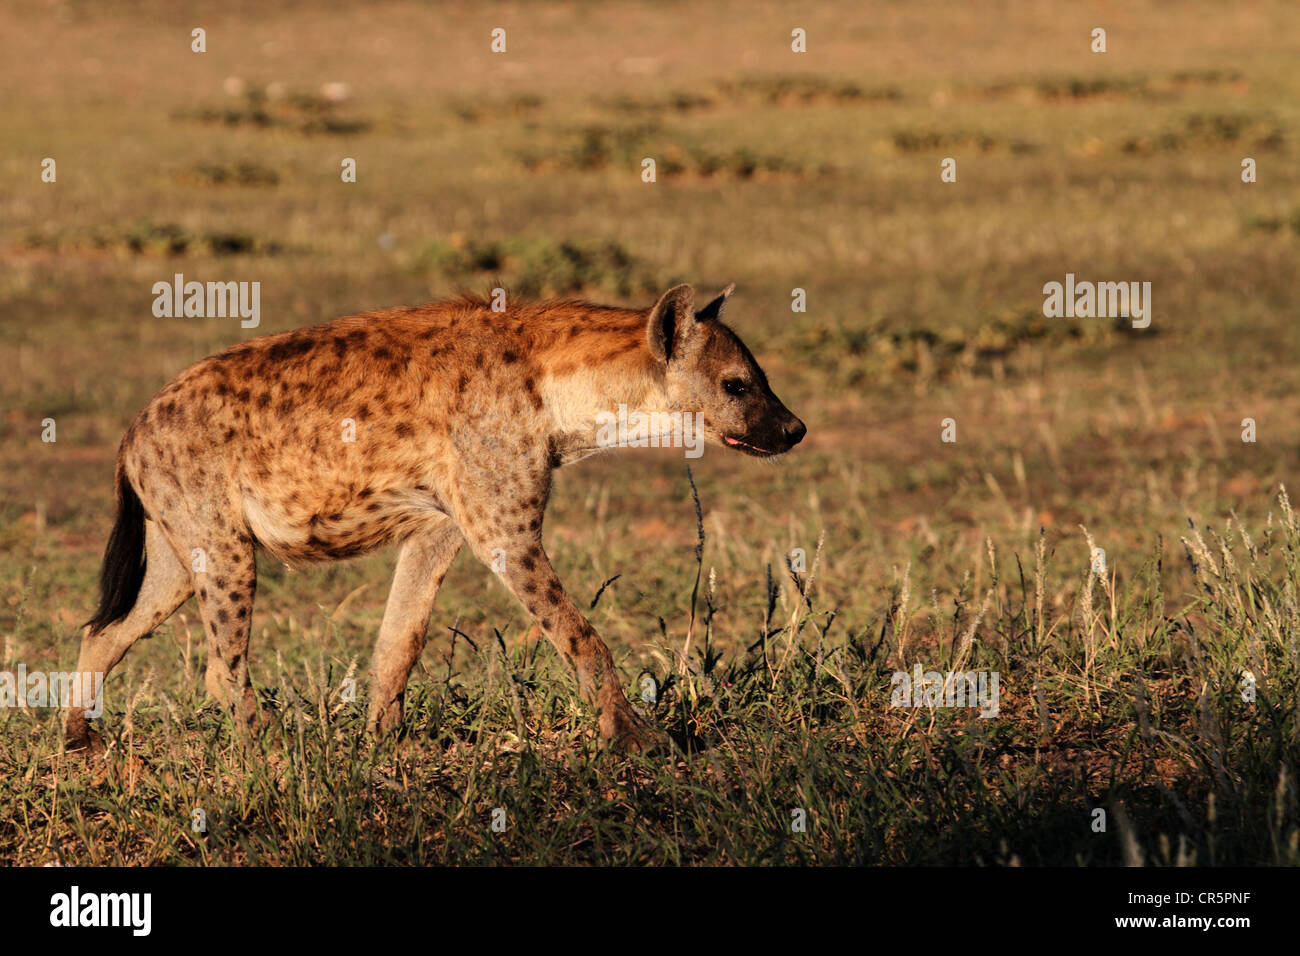 spotted hyaena single adult walking Stock Photo